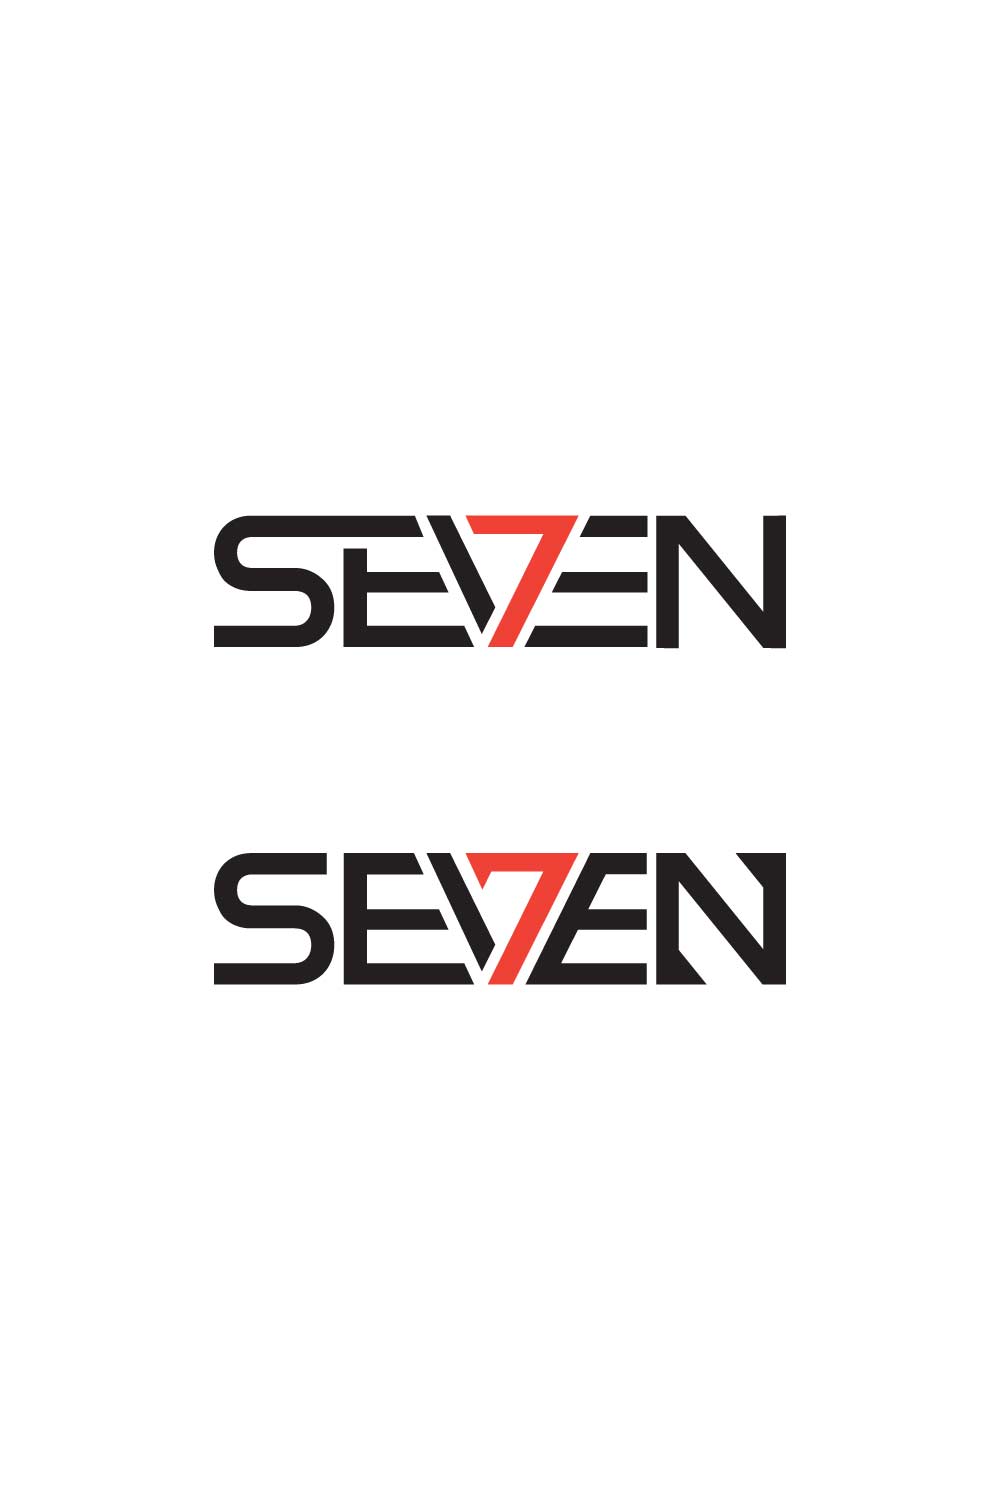 Seven modern stylish typography branding creative logo pinterest preview image.